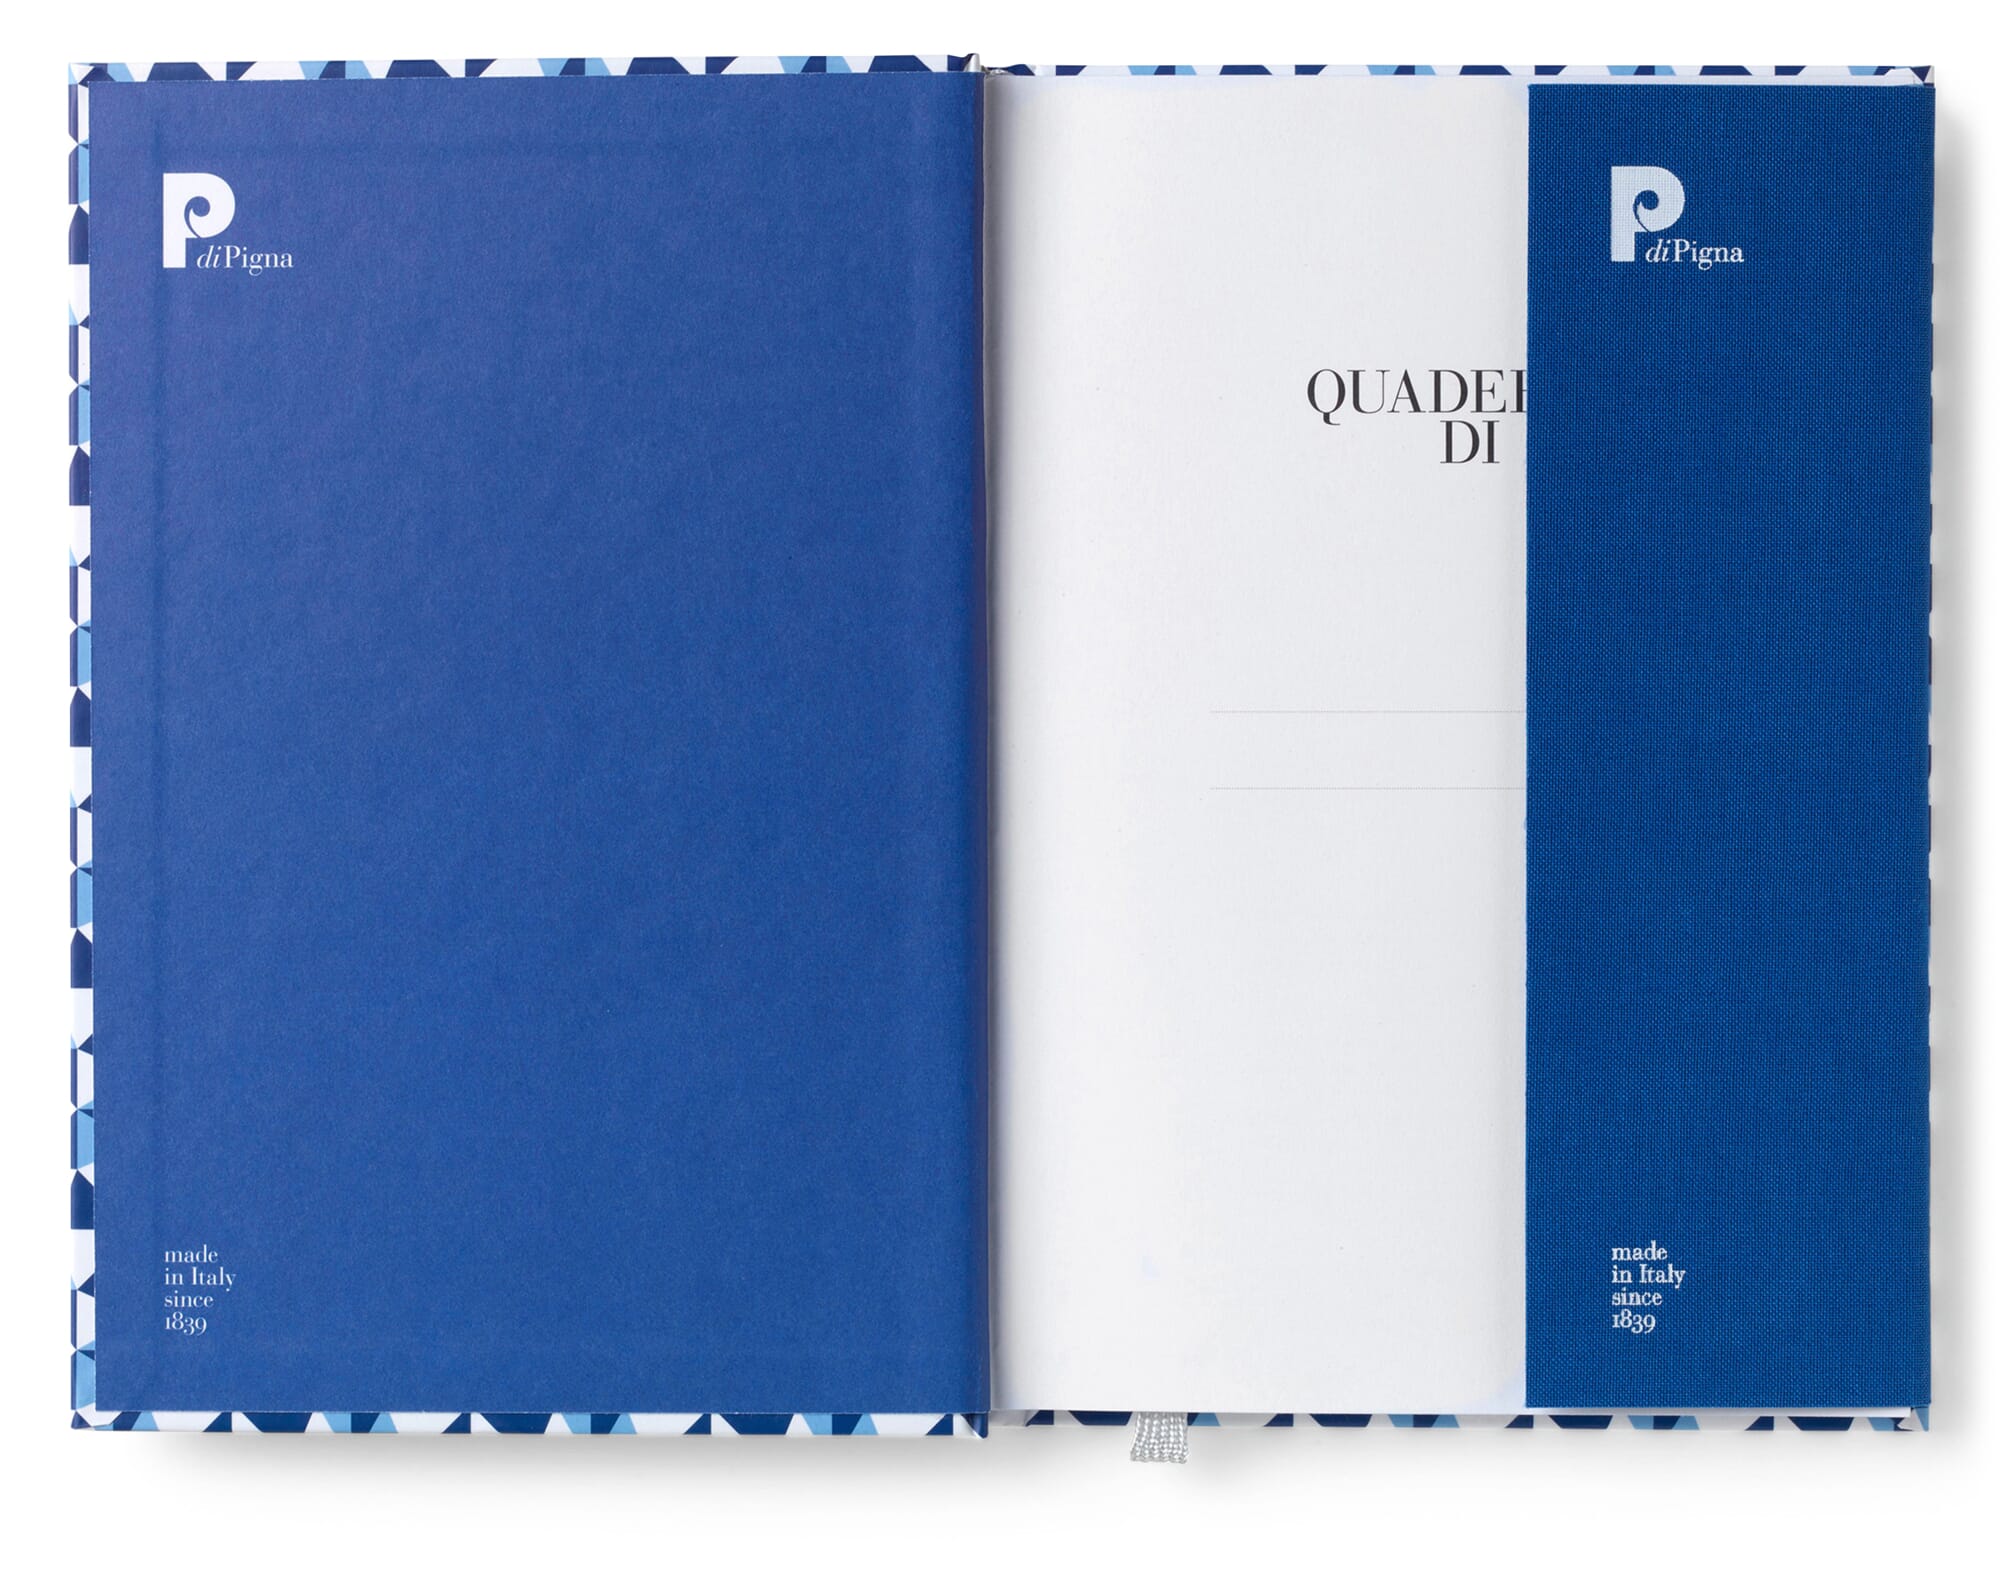 Notizheft Pigna, DIN A5 - Hardcover, Blau / Blau